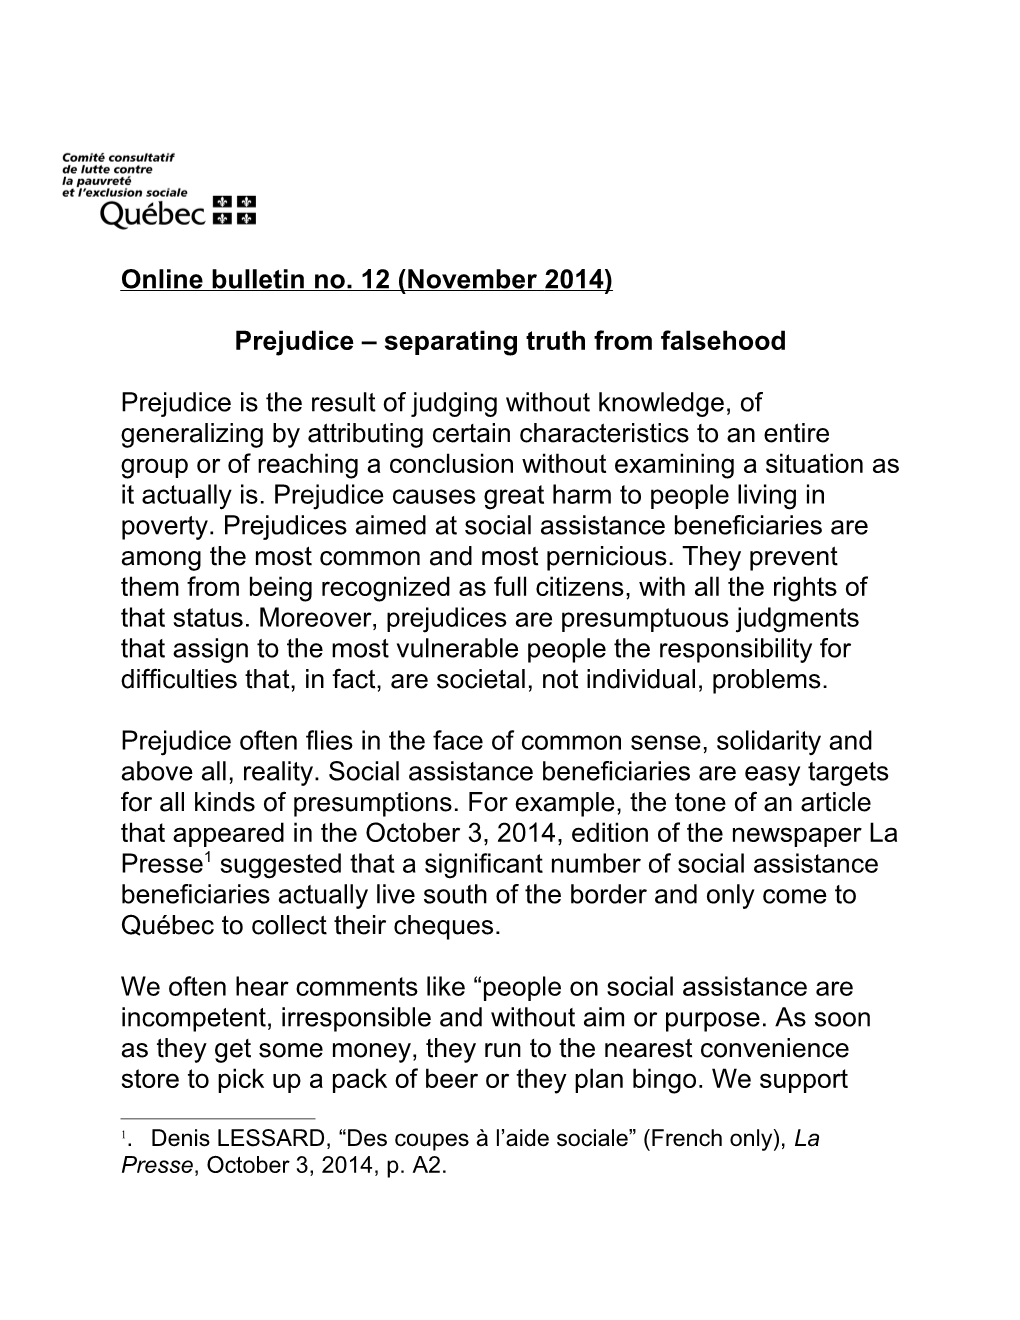 Online Bulletin No.12 November 2014